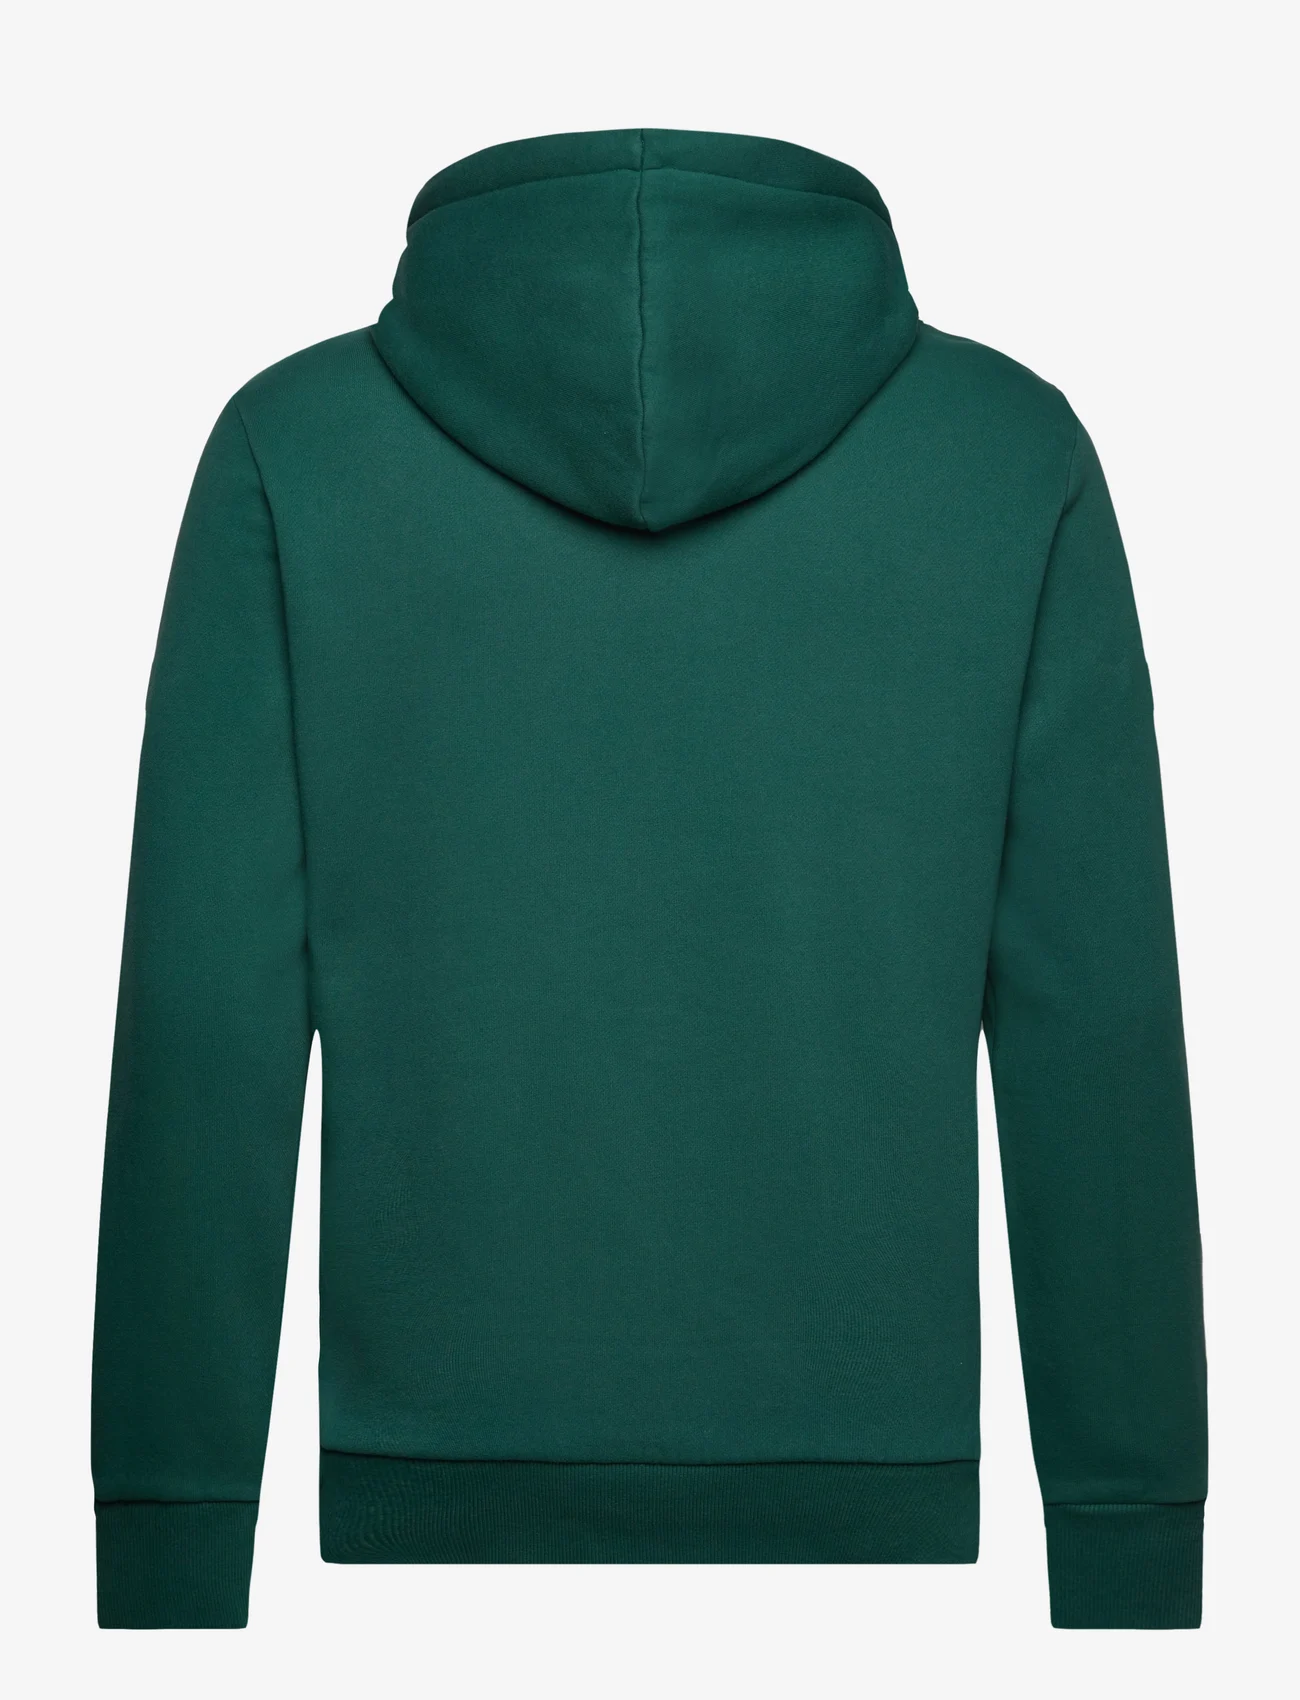 Superdry - VINTAGE CORE SOURCE HOOD - hoodies - forest green - 1